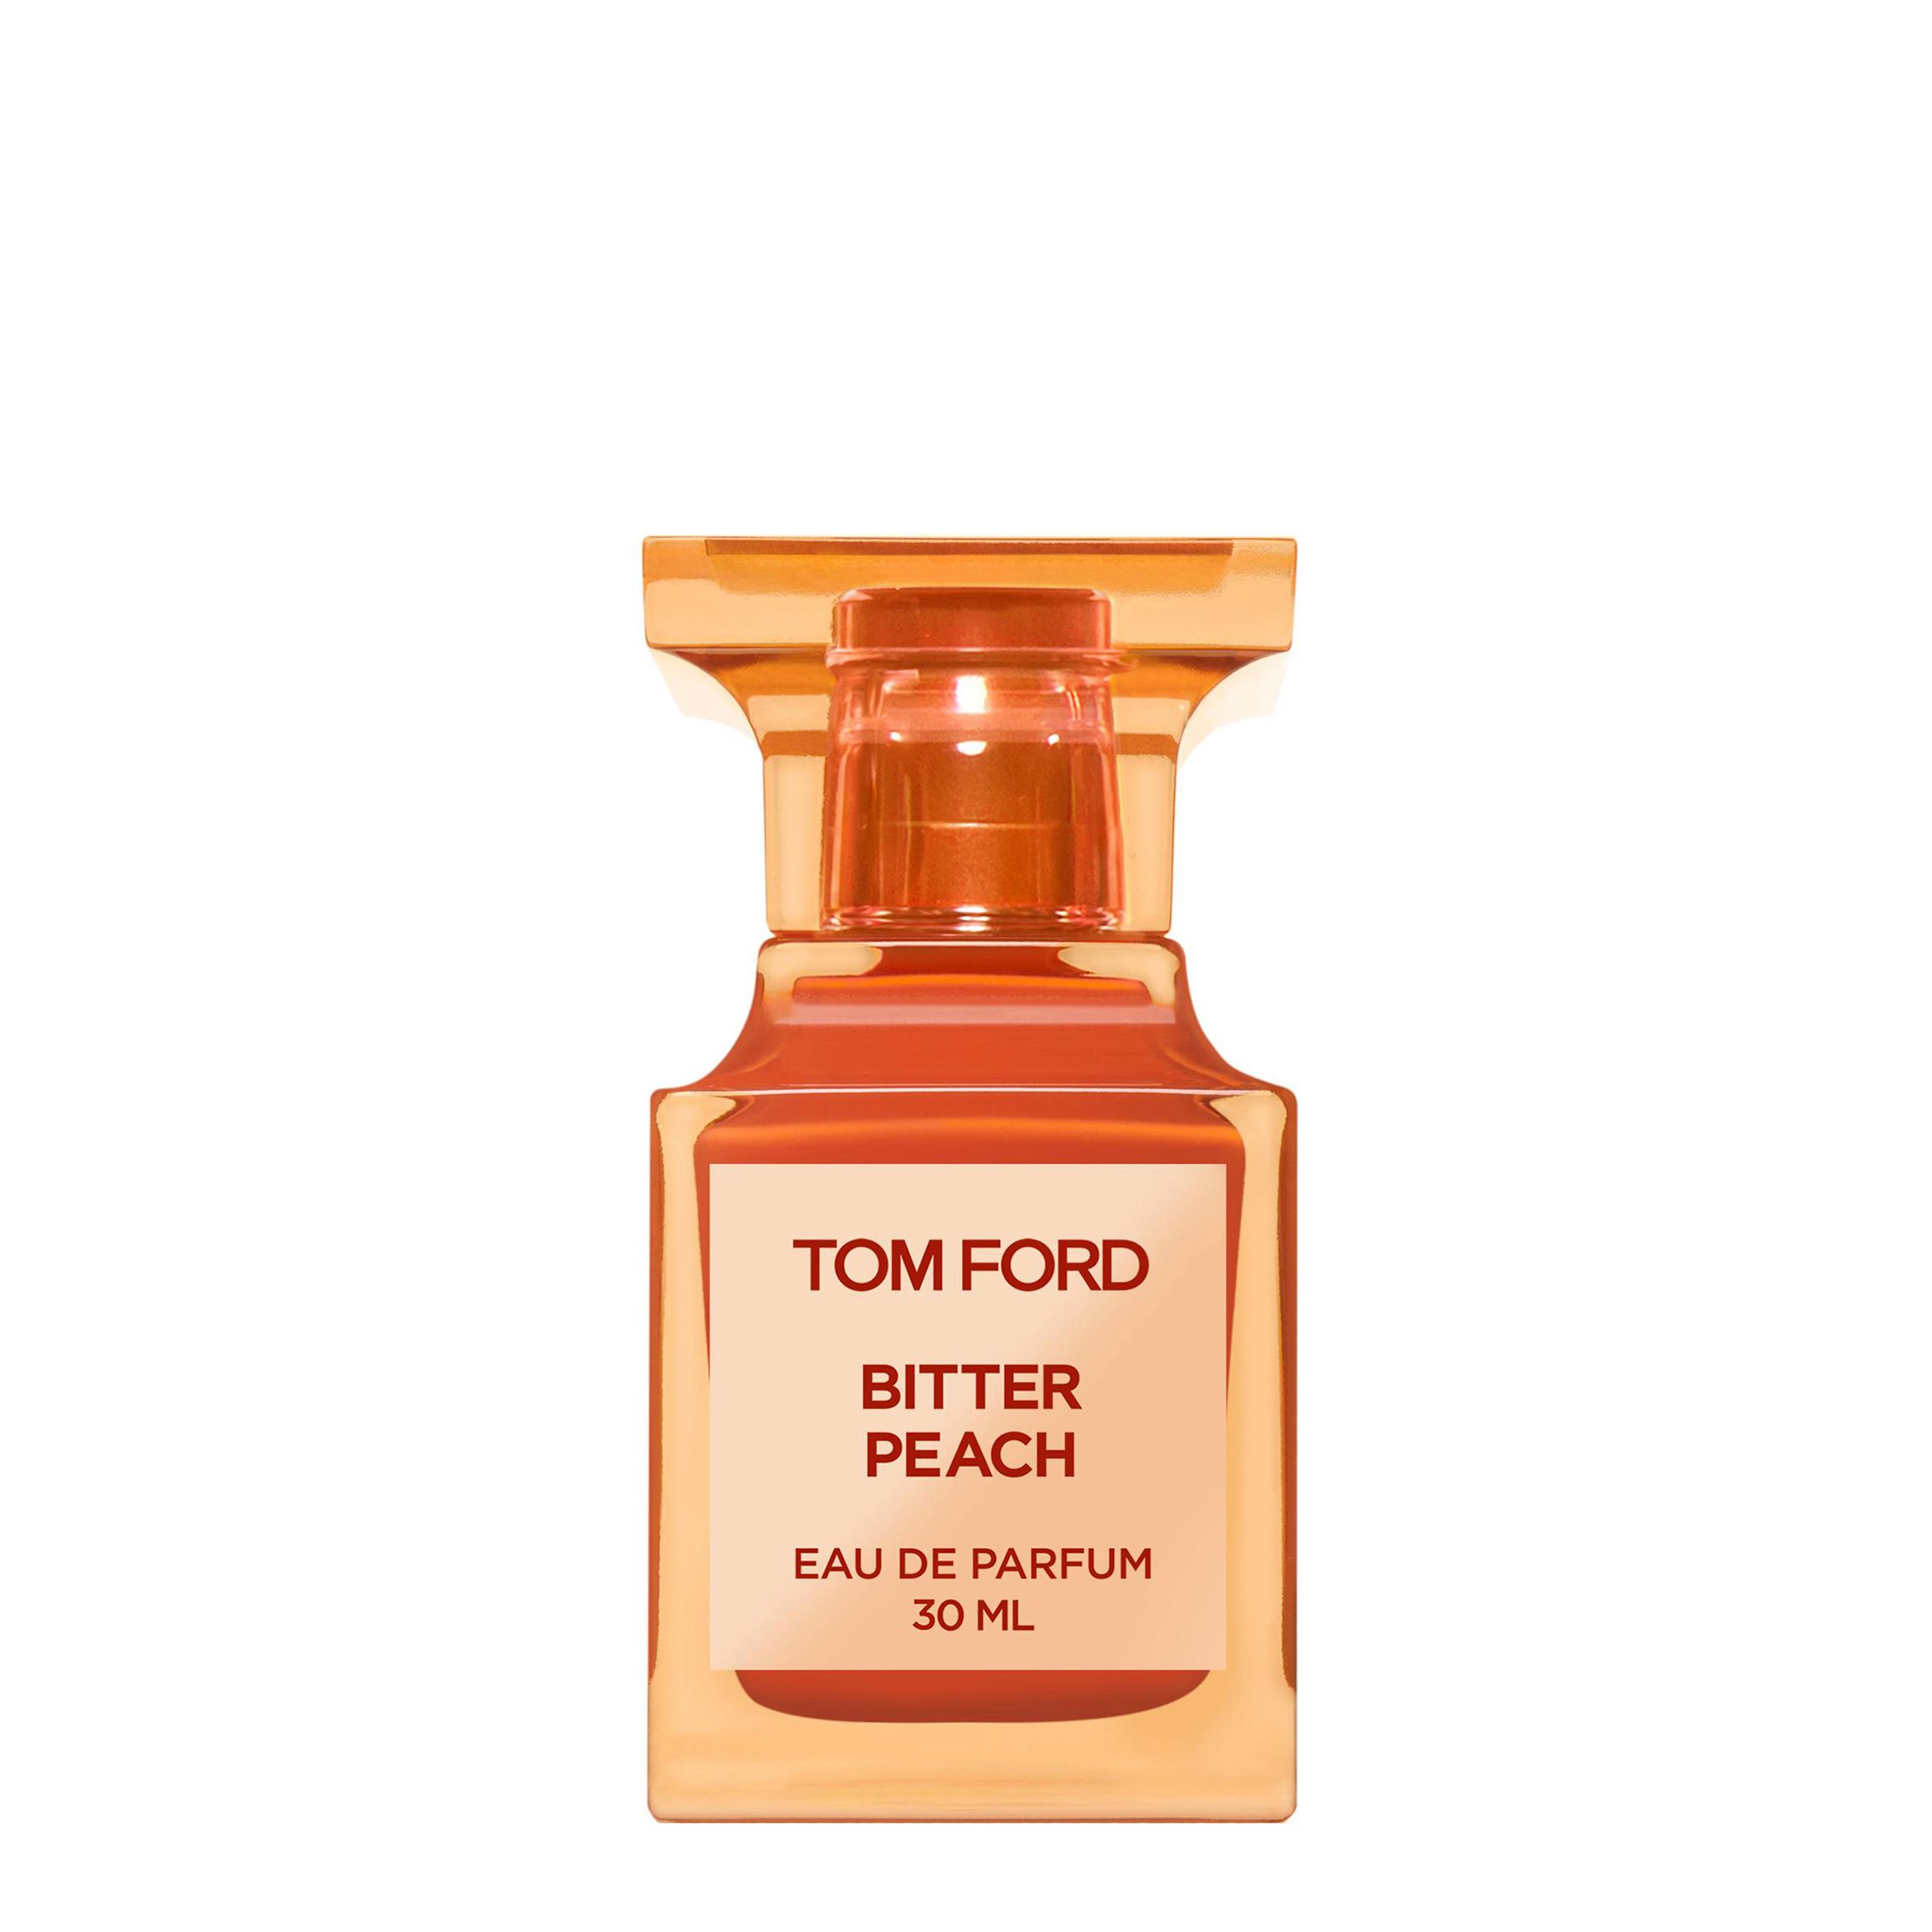 Вода парфюмерная Tom Ford Bitter Peach, унисекс, 30 мл tom ford bitter peach 30